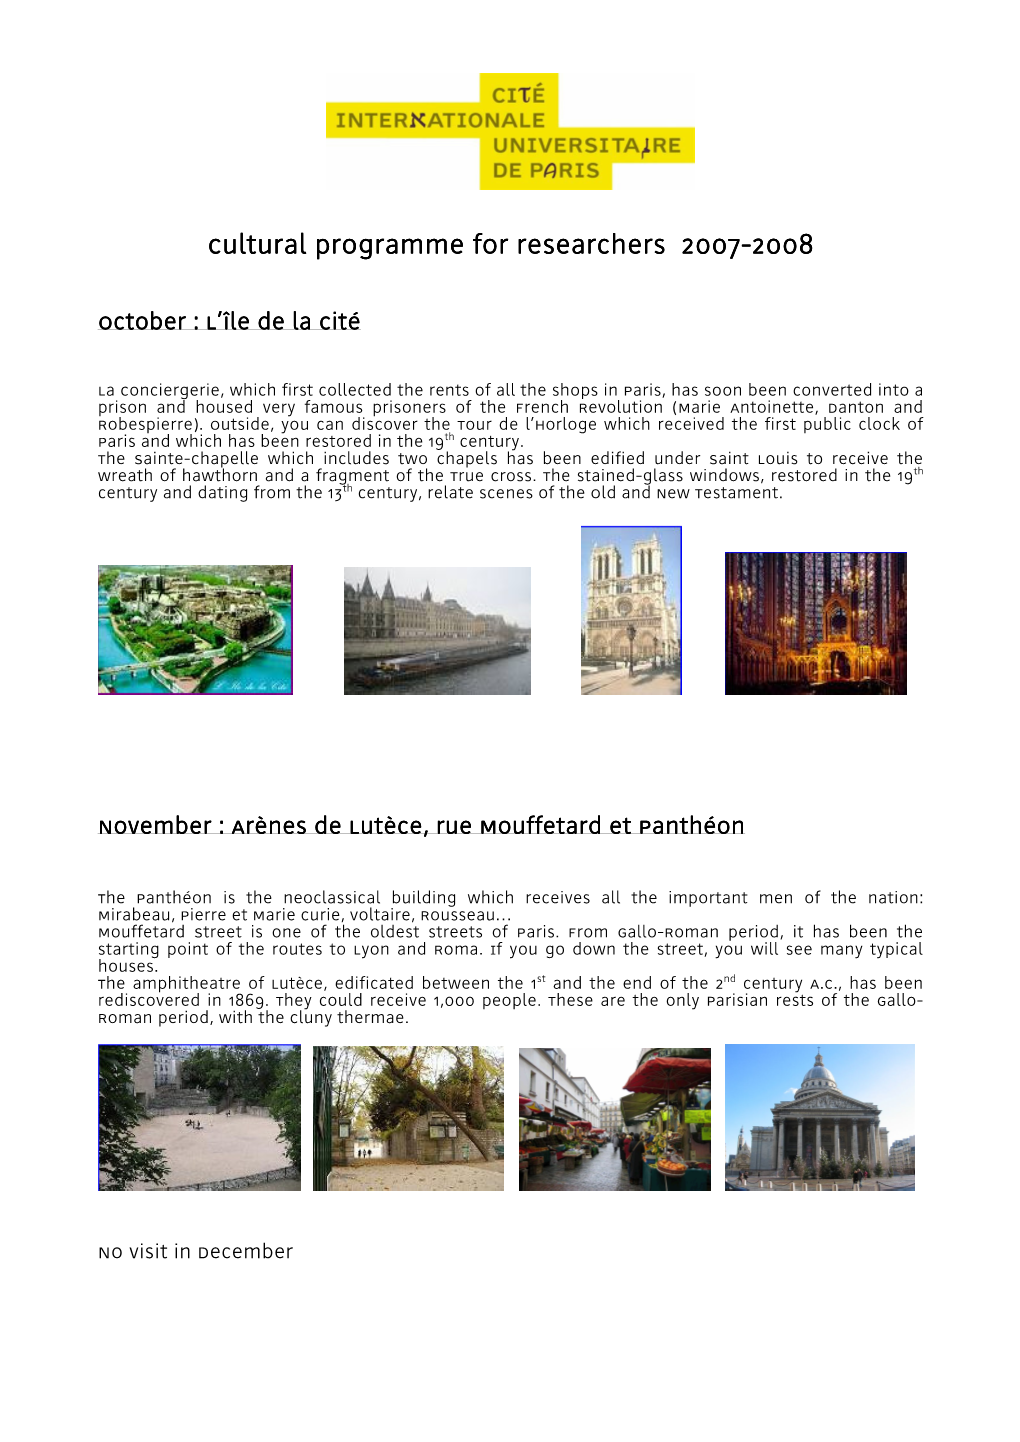 Cultural Program Cultural Programme for Researchers for Researchers for Researchers 2007-2008